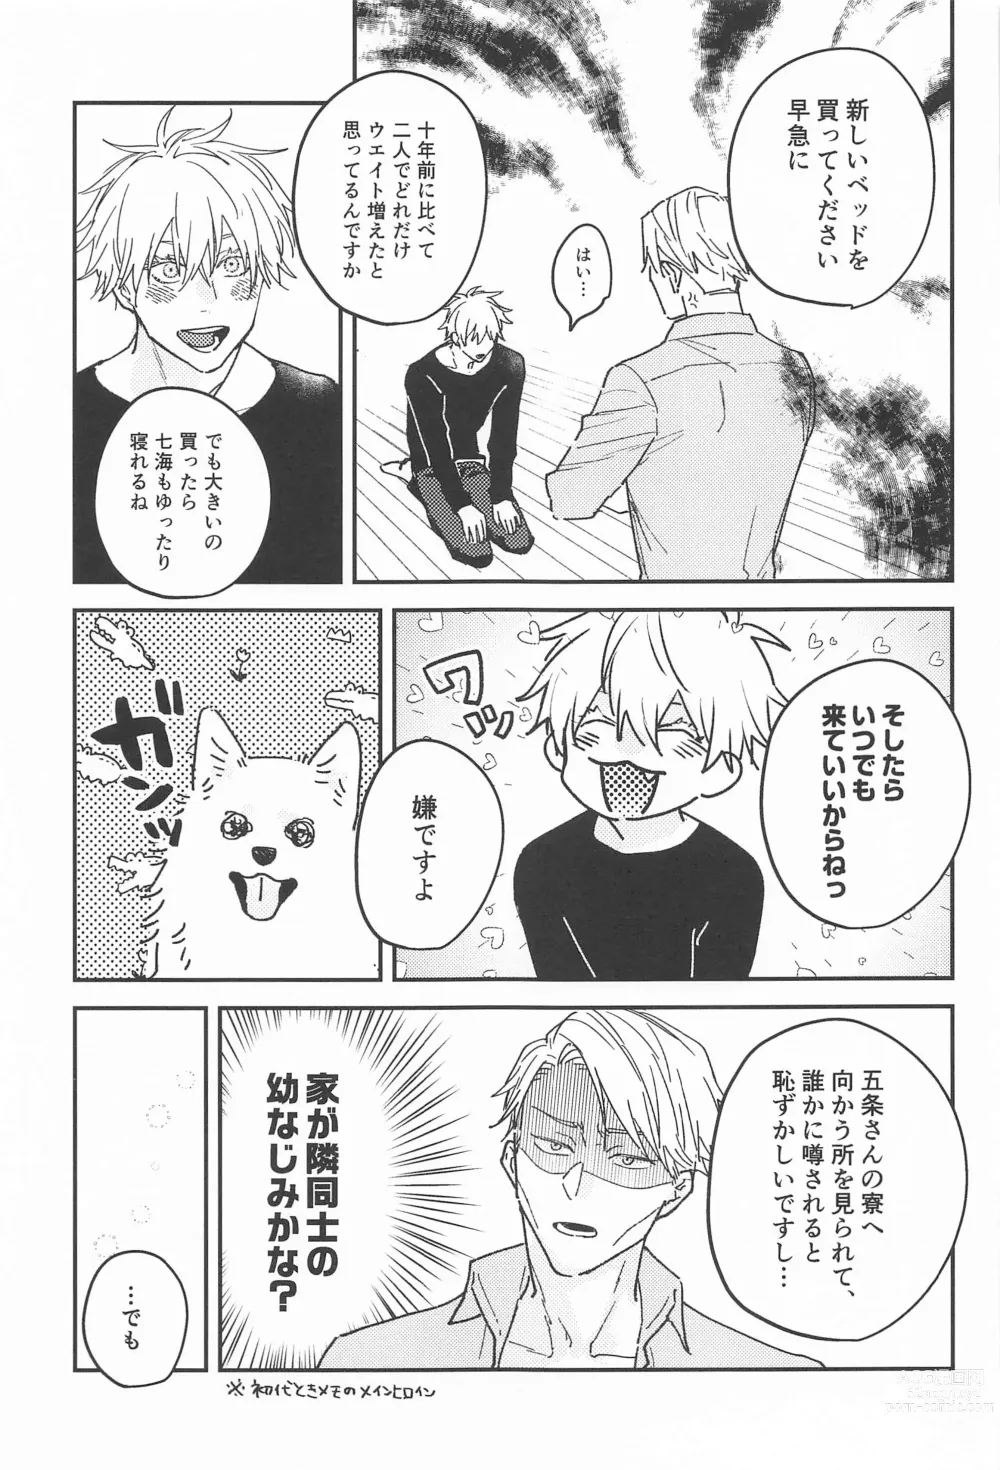 Page 22 of doujinshi 10years